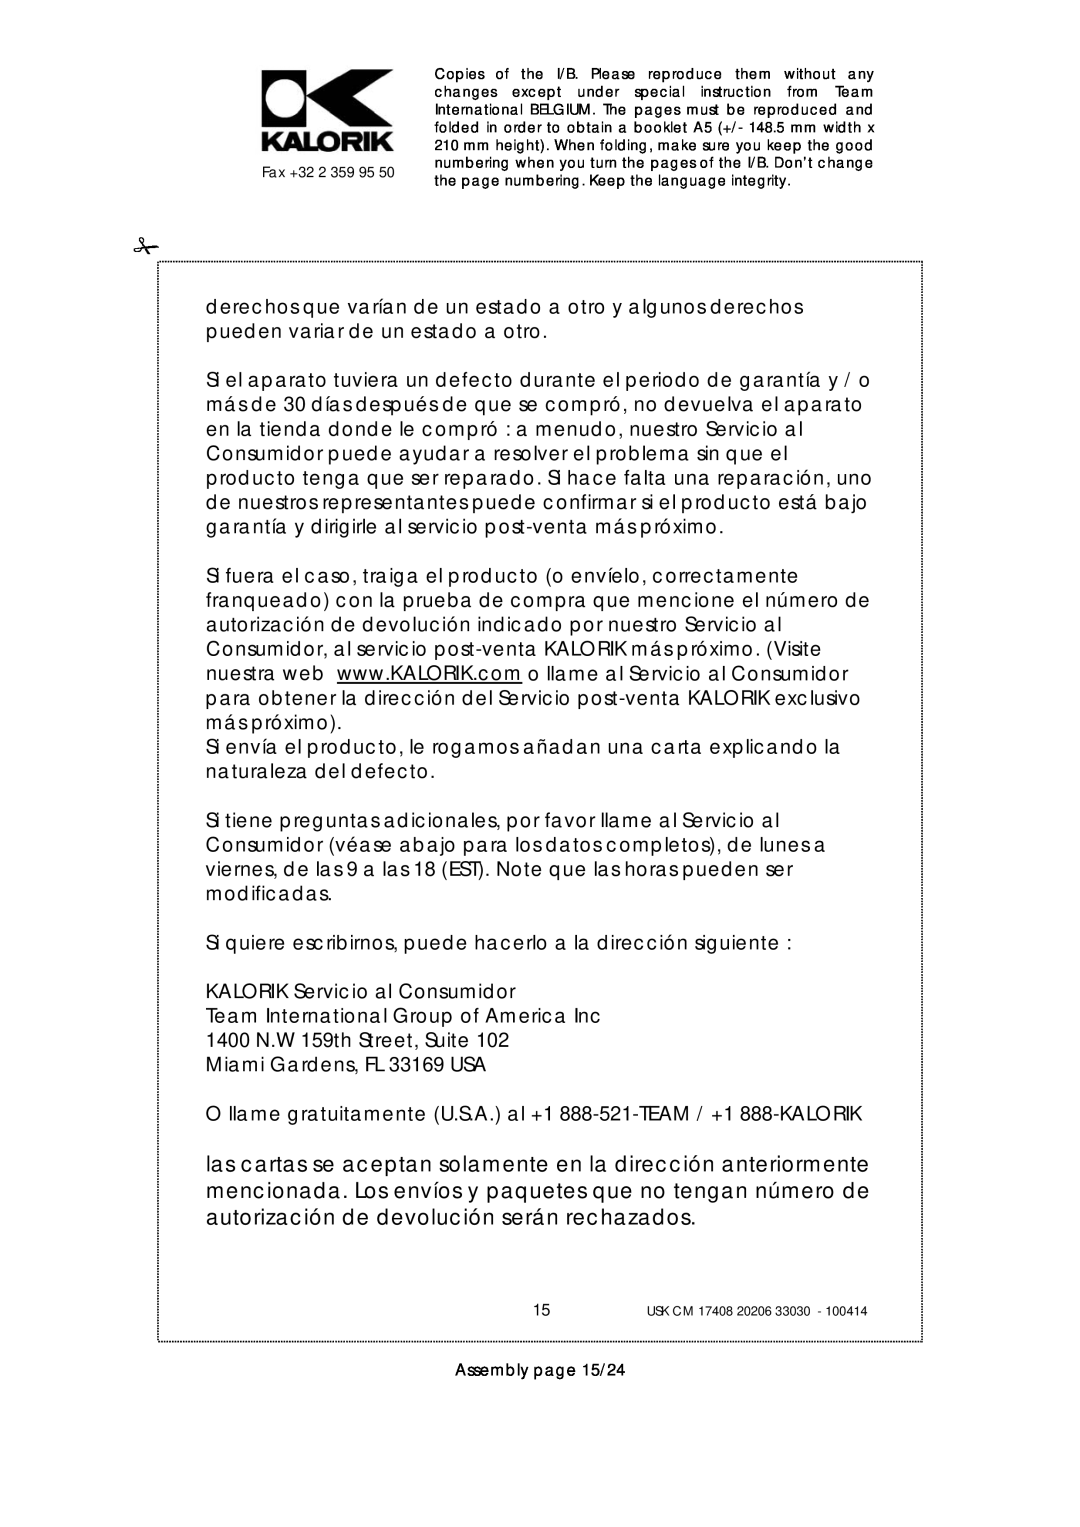 Kalorik USK CM 33030, USK CM 17408, USK CM 20206 manual KALORIK Servicio al Consumidor 